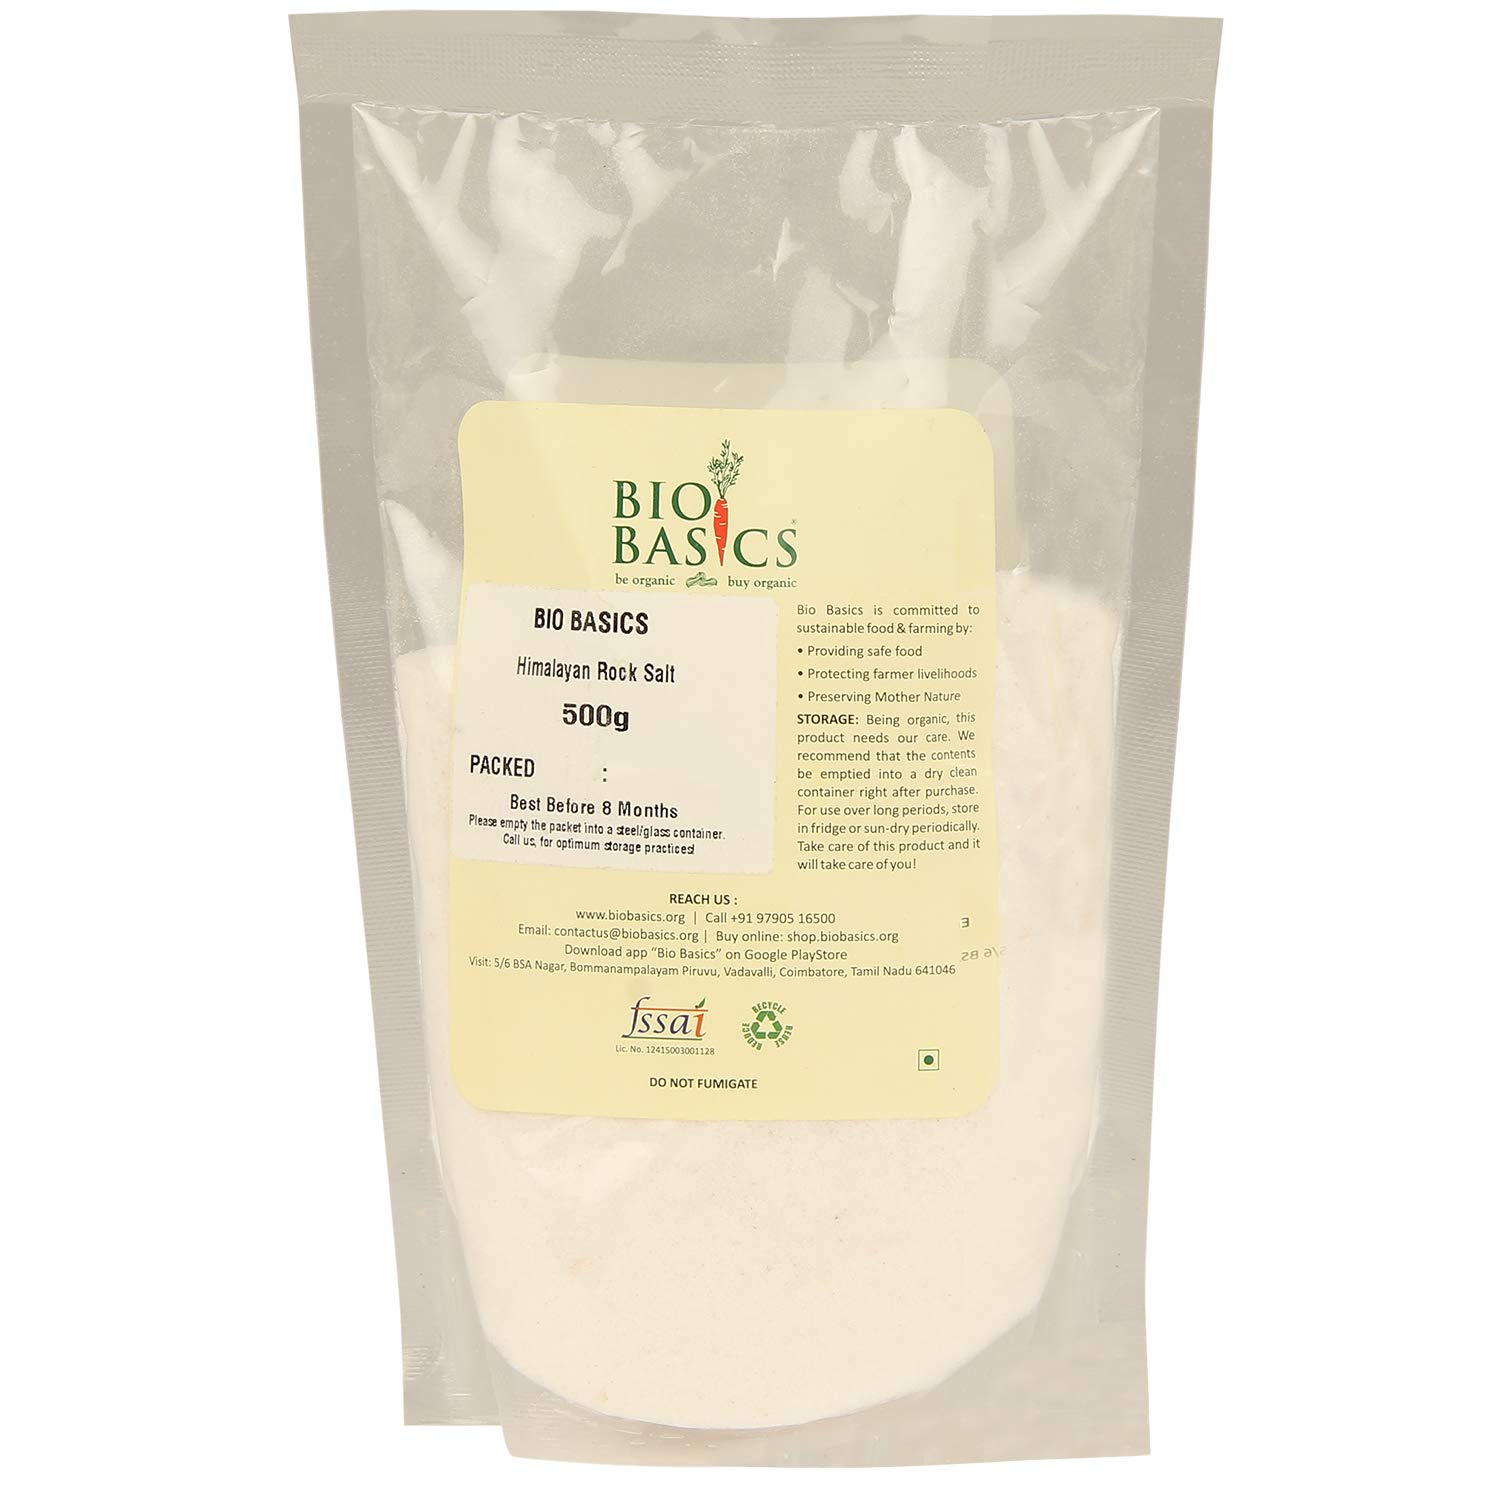 Product: Biobasics Himalayan Rock Salt Powder, 500g | Ethically sourced from Bio Basics